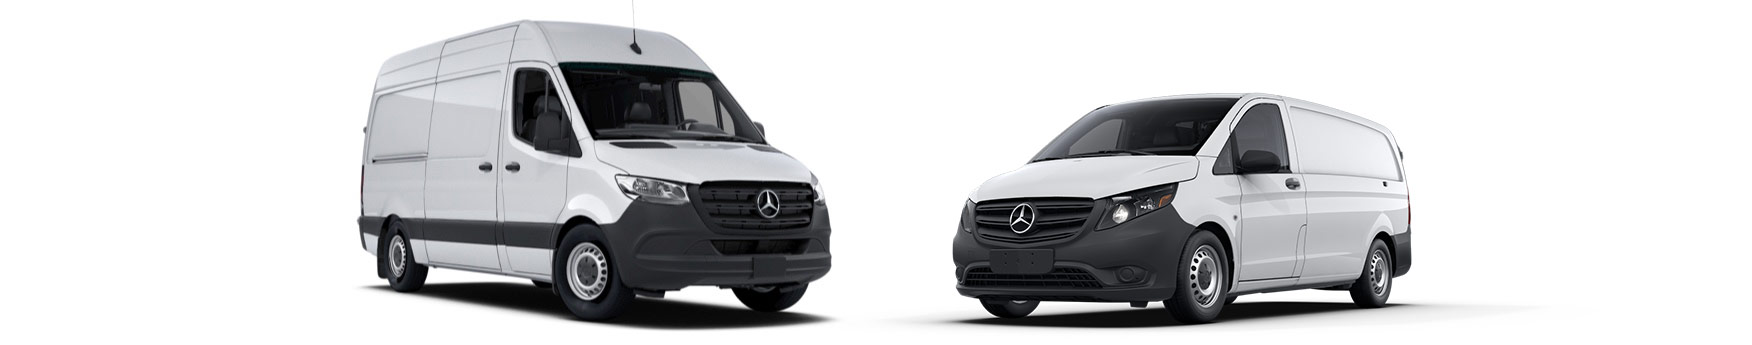 Certified Pre-Owned, Mercedes-Benz Vans